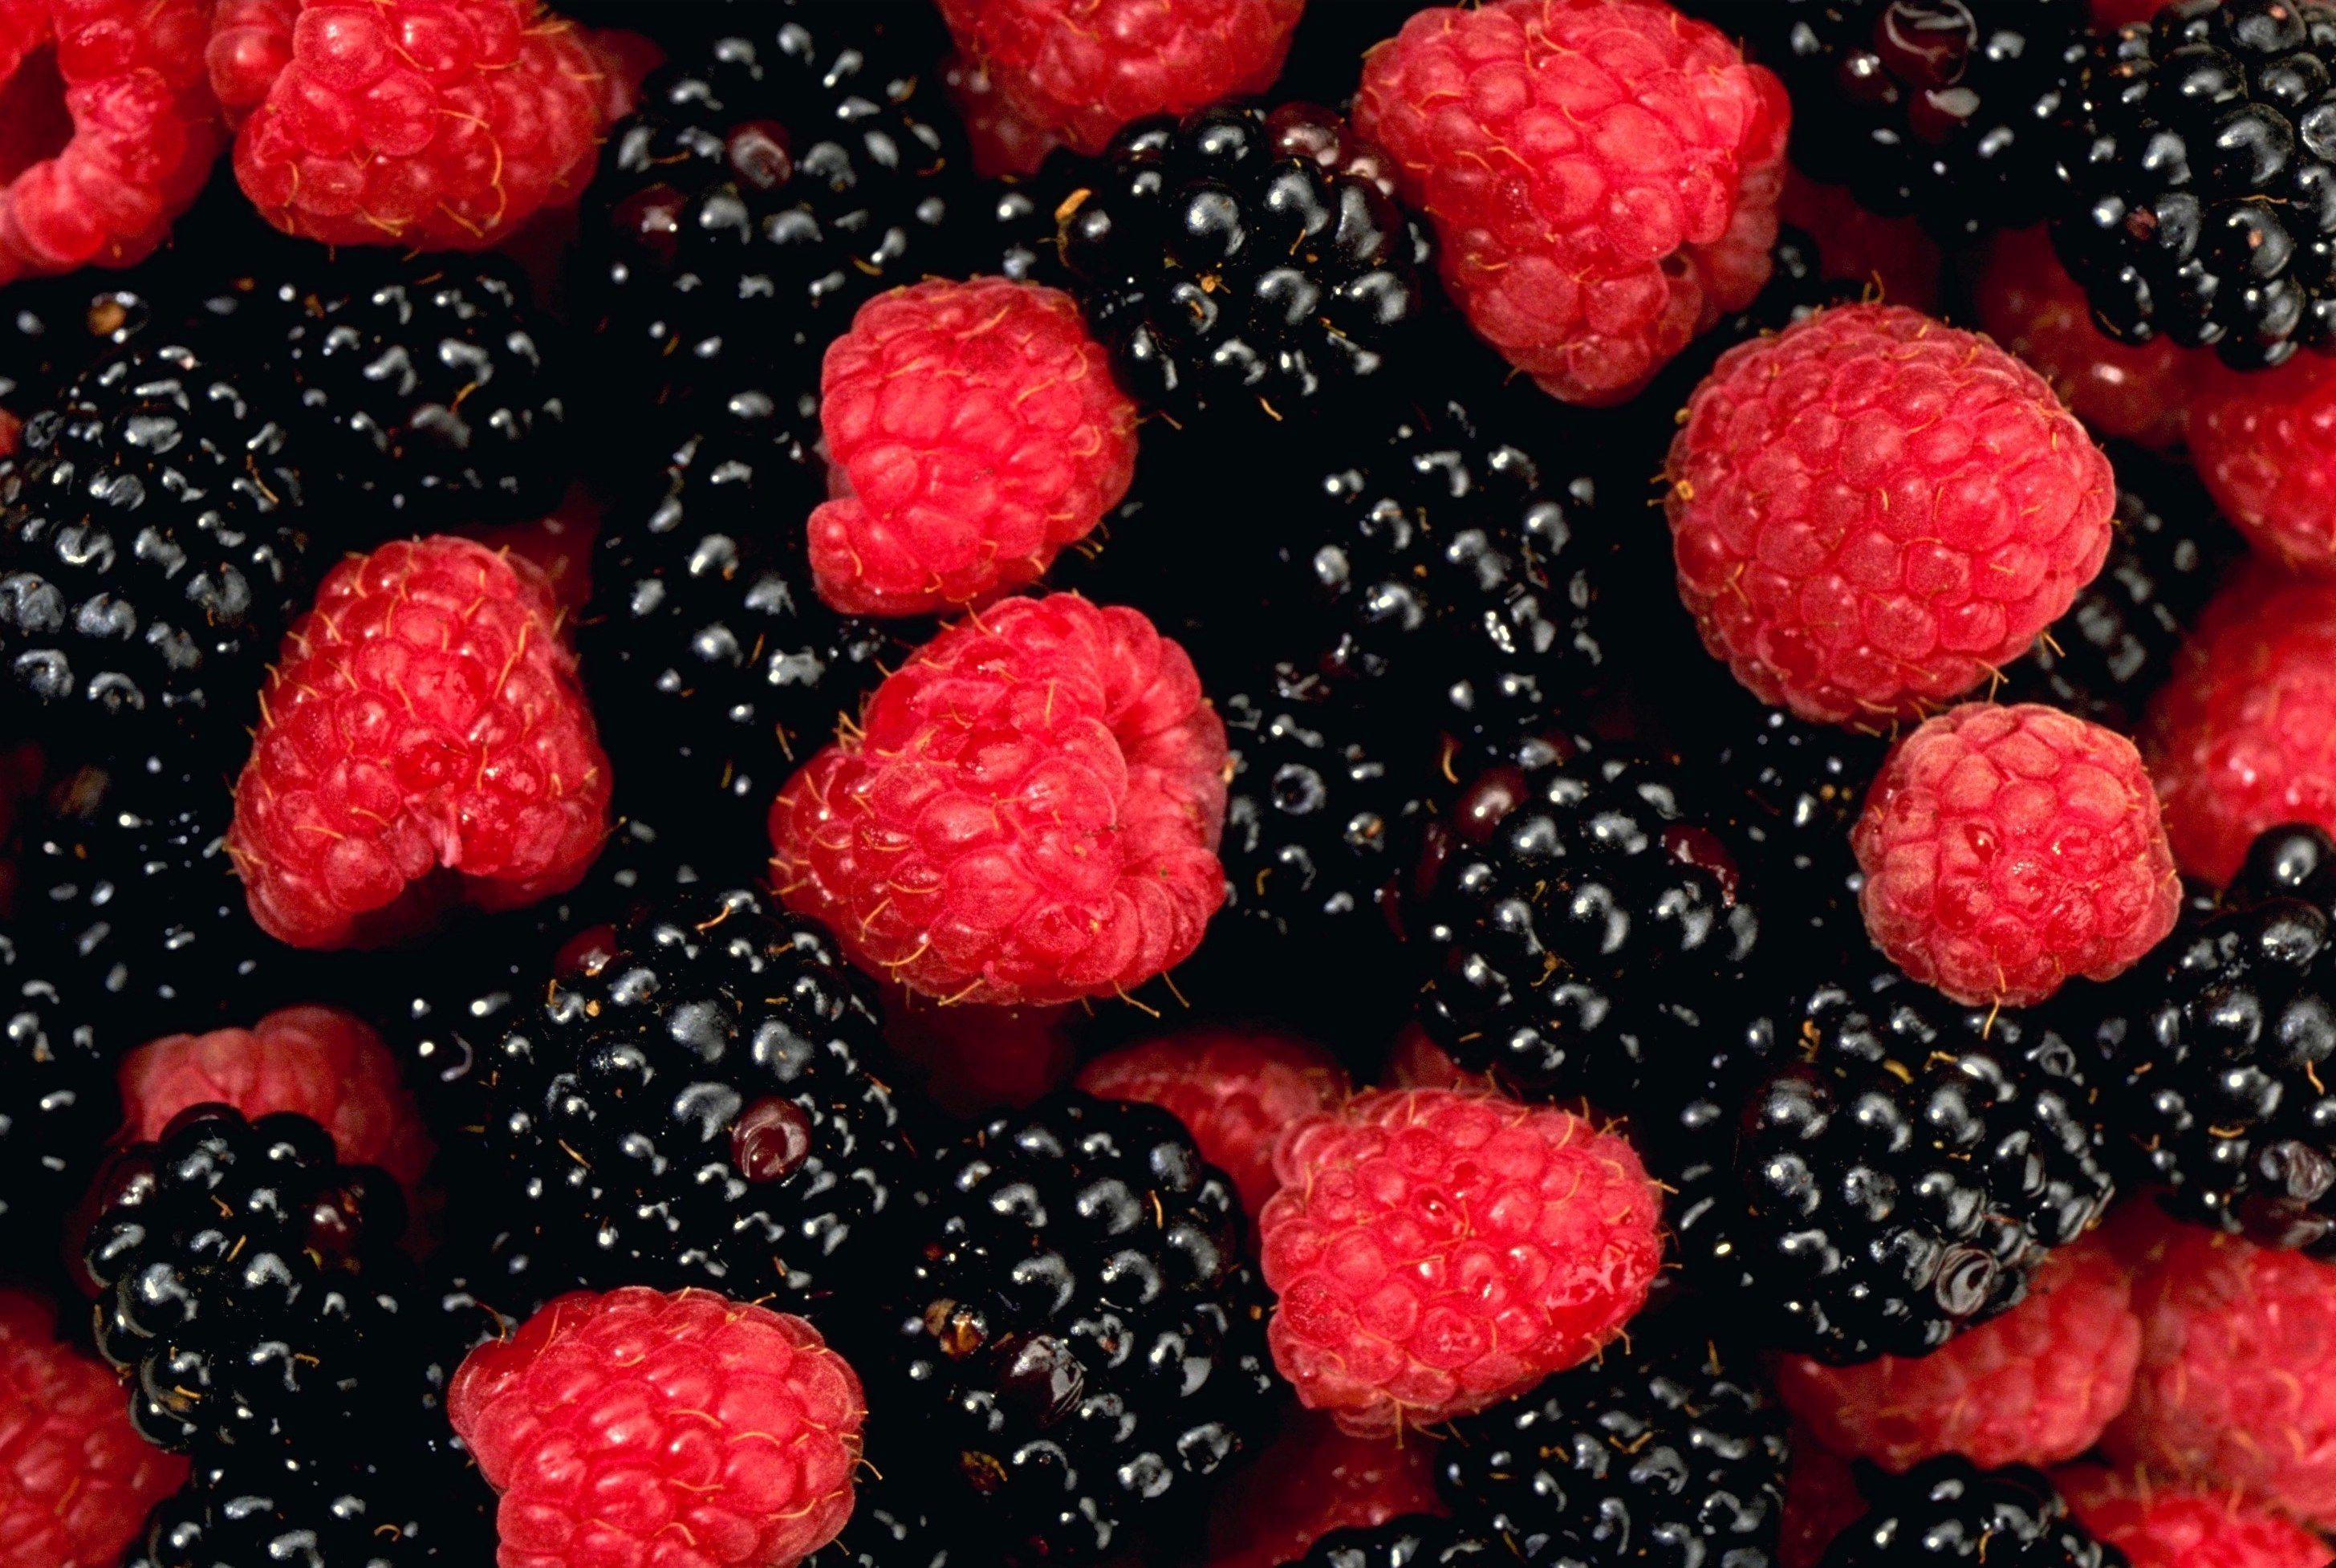 Wallpapers Fruit Raspberry Food Image #252253 Download